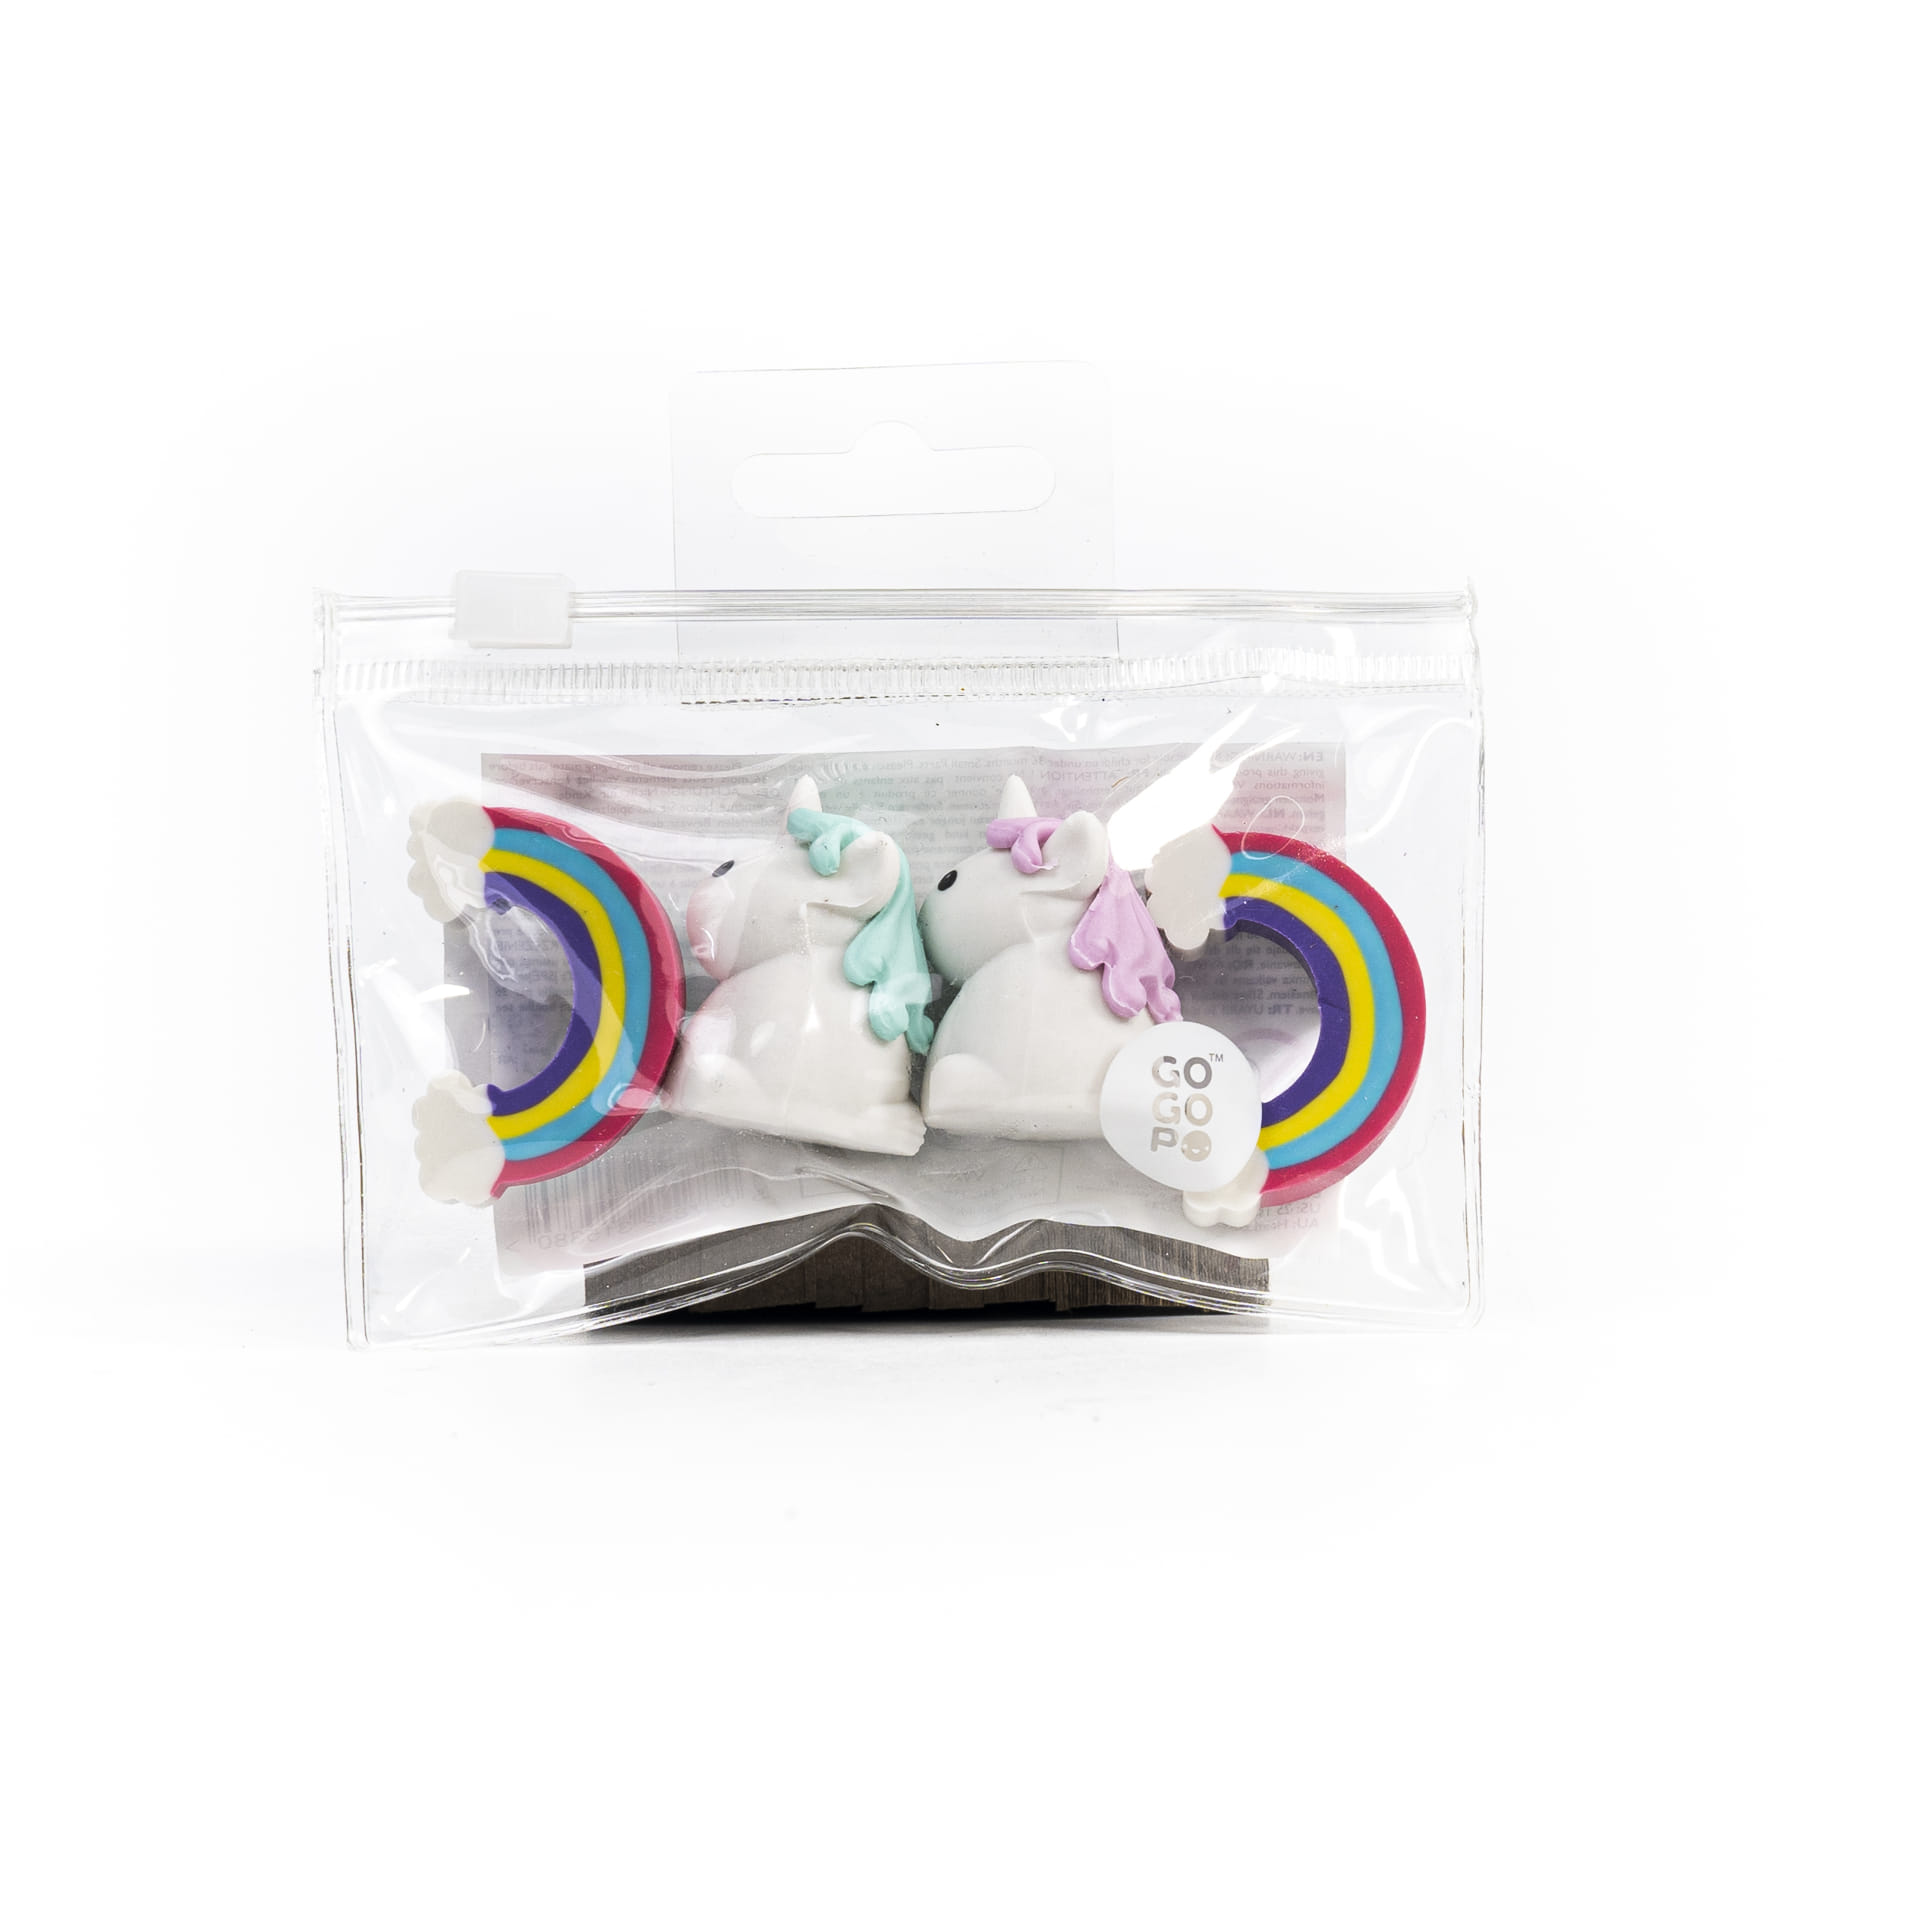 GOGOPO Unicorn & Rainbow Erasers